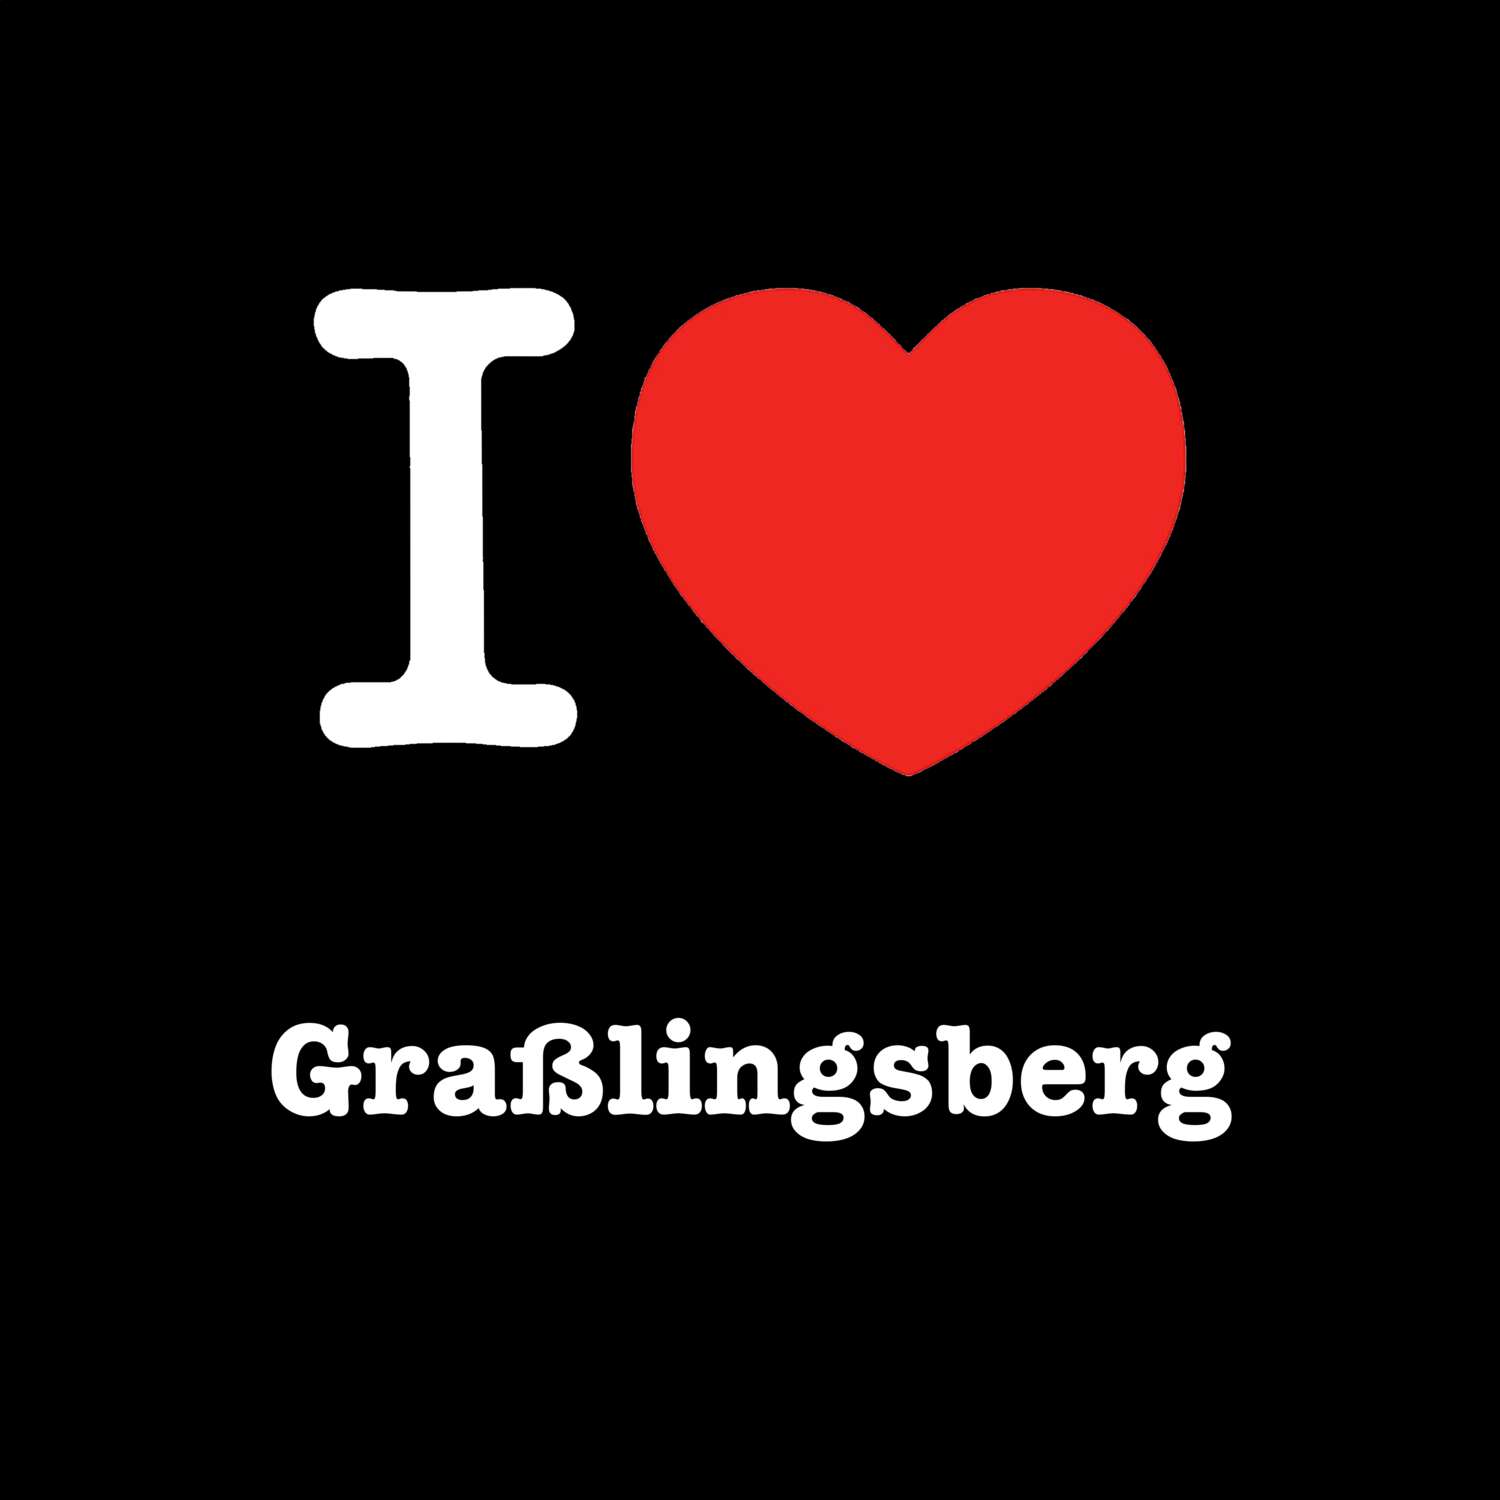 Graßlingsberg T-Shirt »I love«